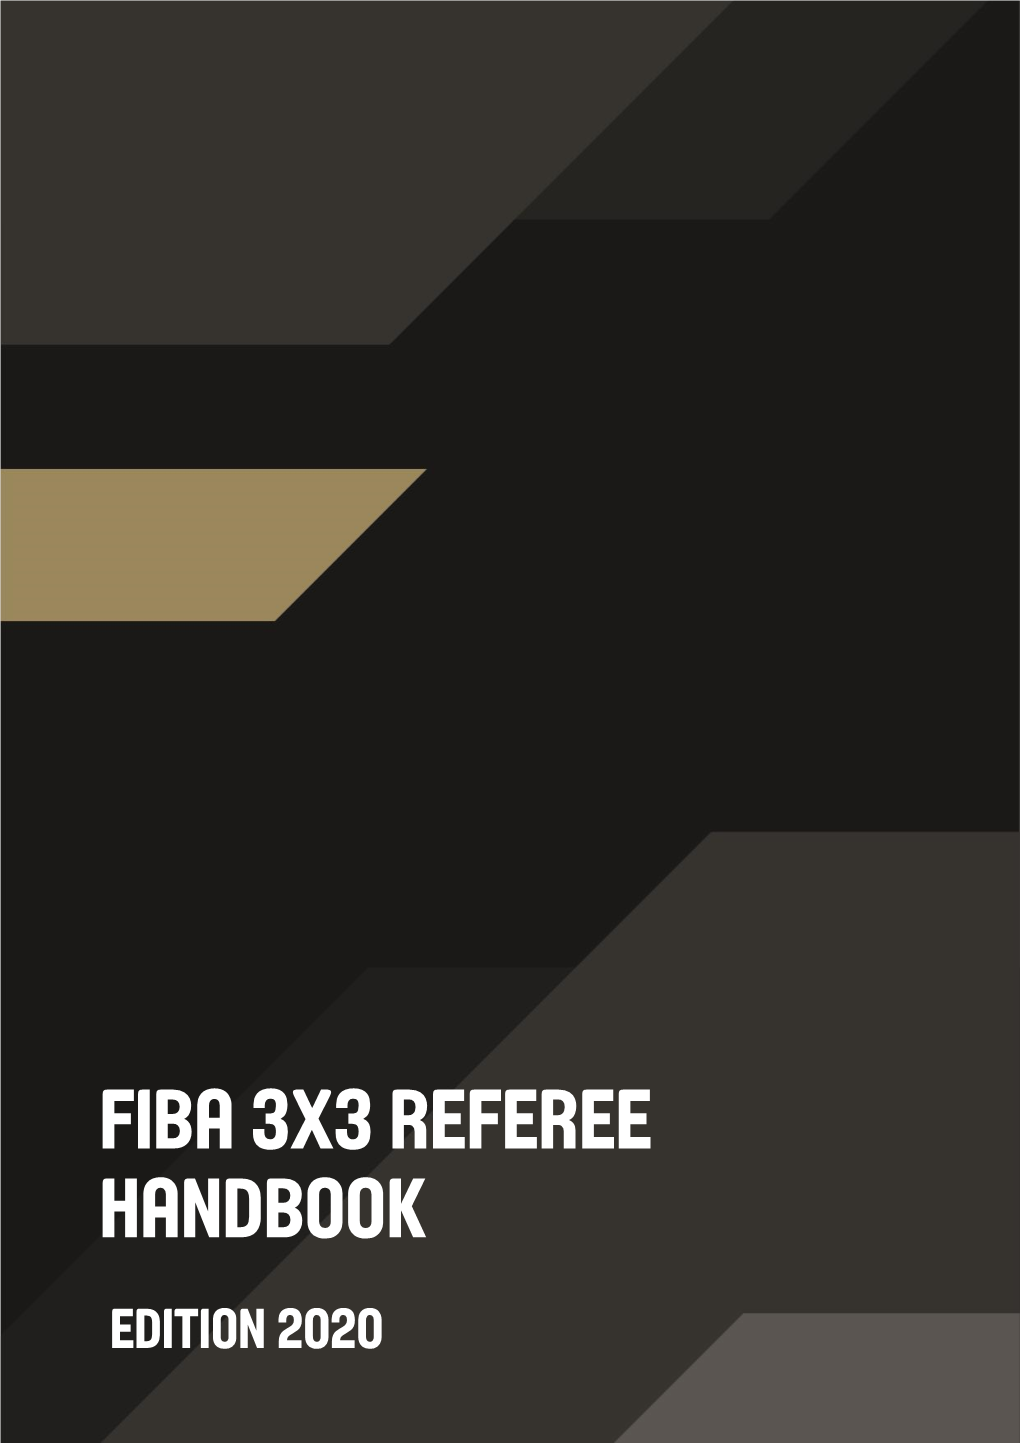 FIBA 3X3 Referee Handbook Prevail in All Cases